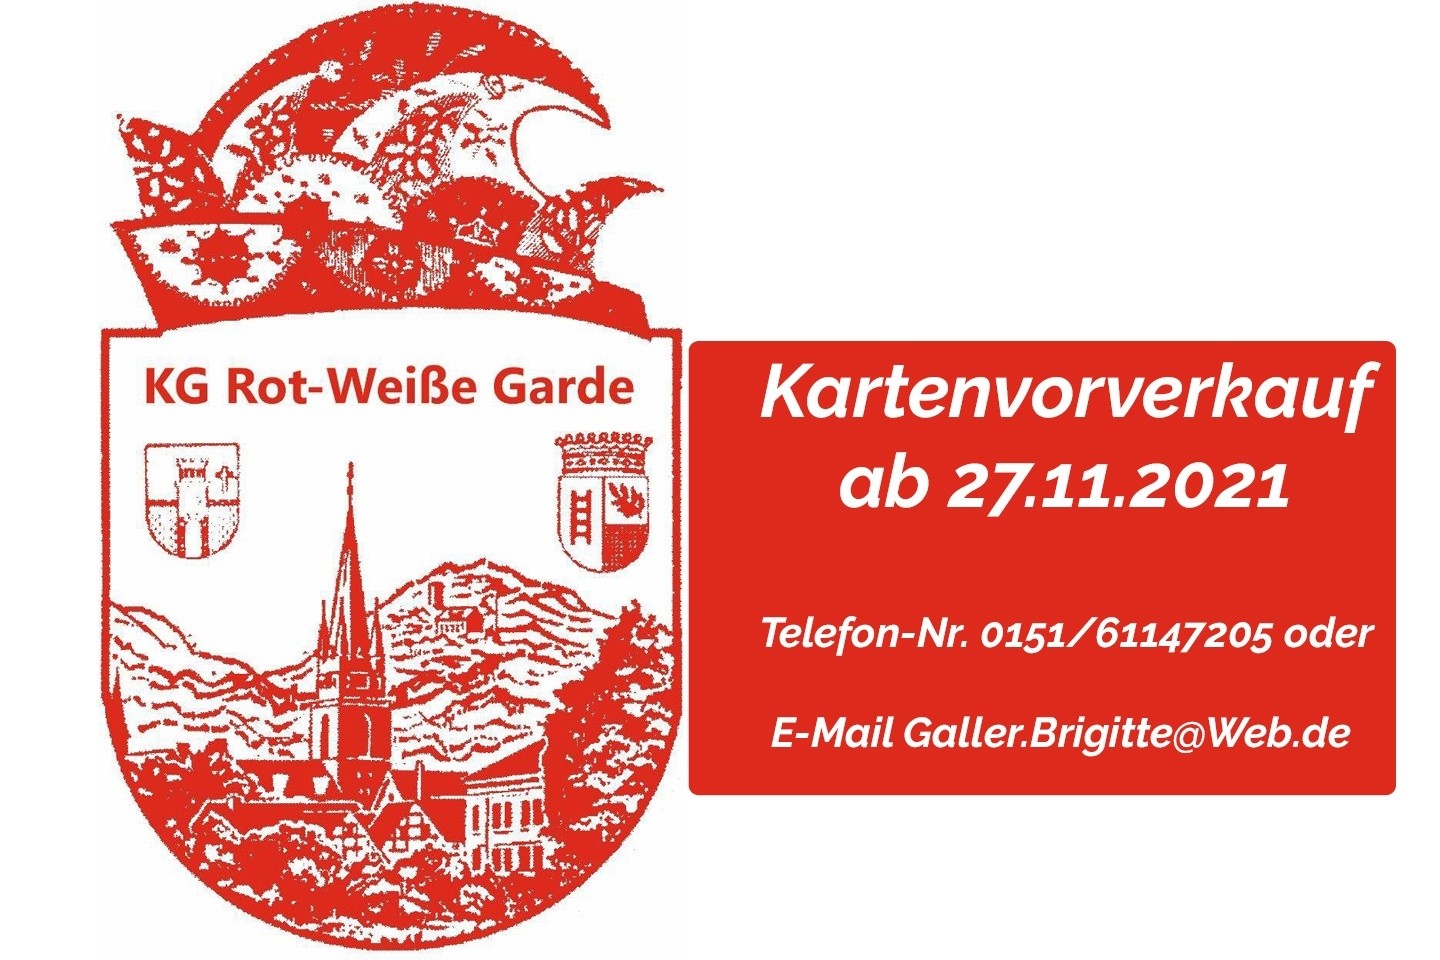 Kartenvorverkauf Karneval KG Rot Weiß Garde Bad Driburg von 1946 e.V